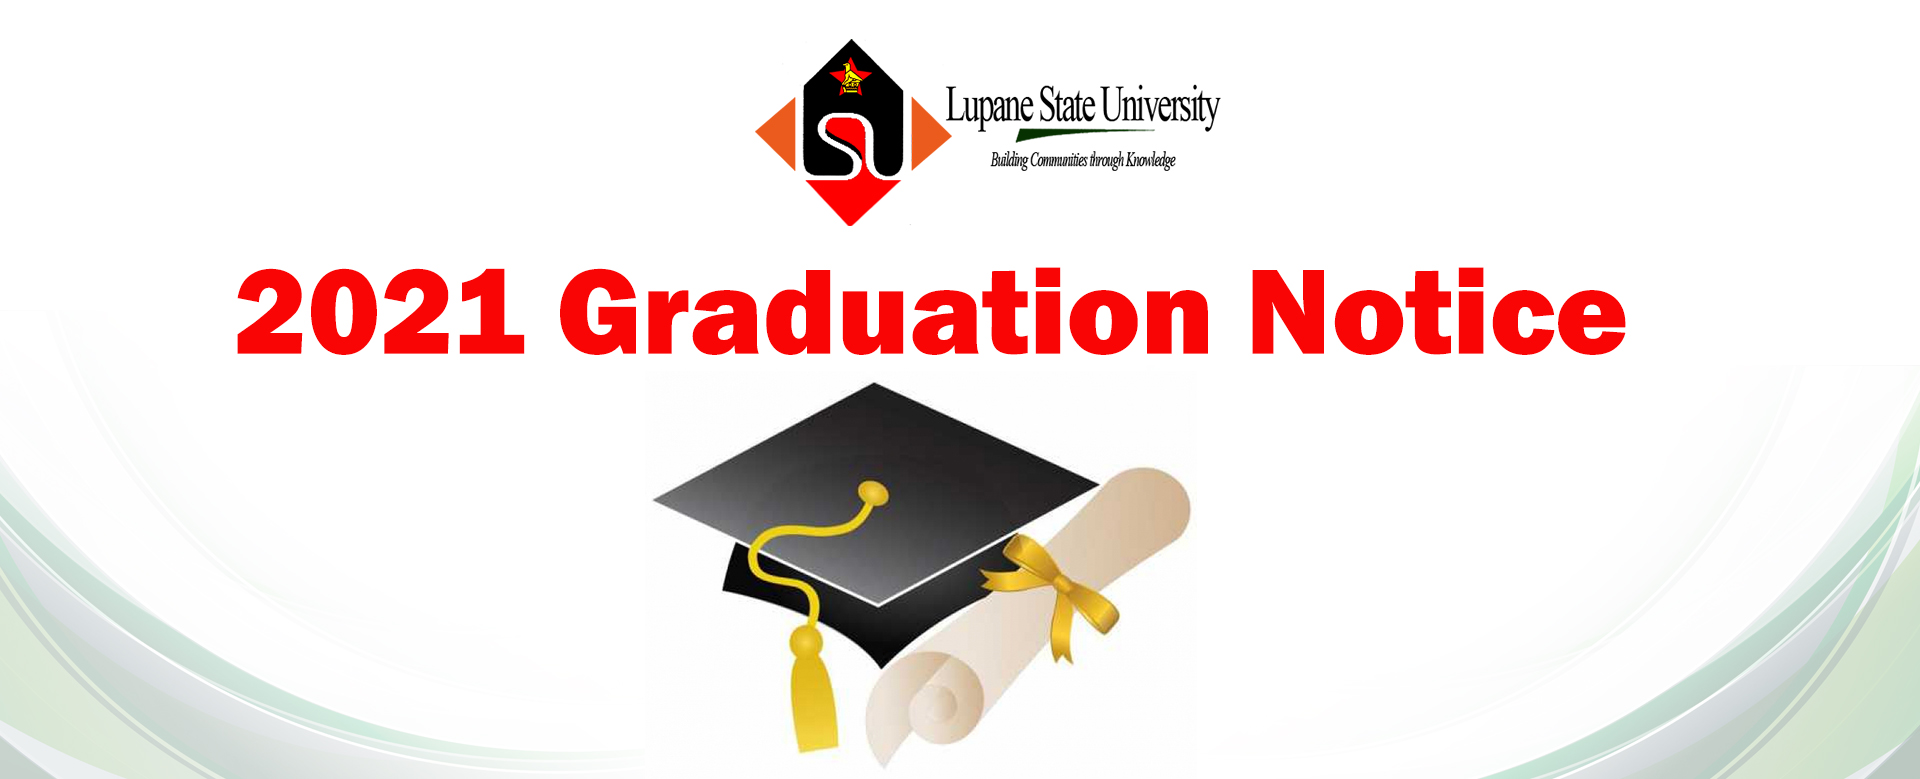 2021 Graduation Notice